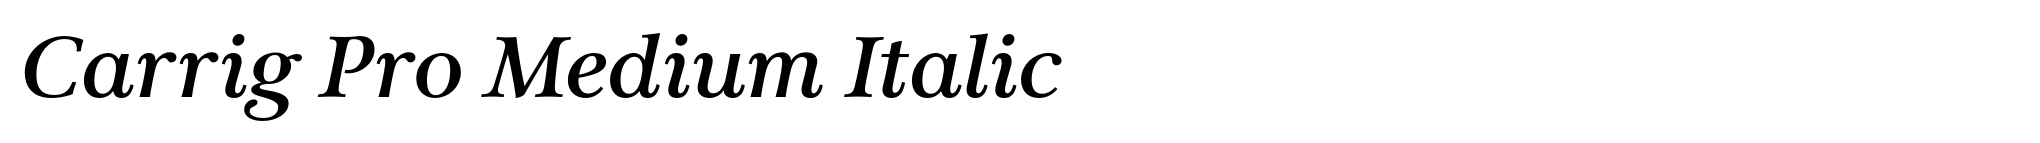 Carrig Pro Medium Italic image